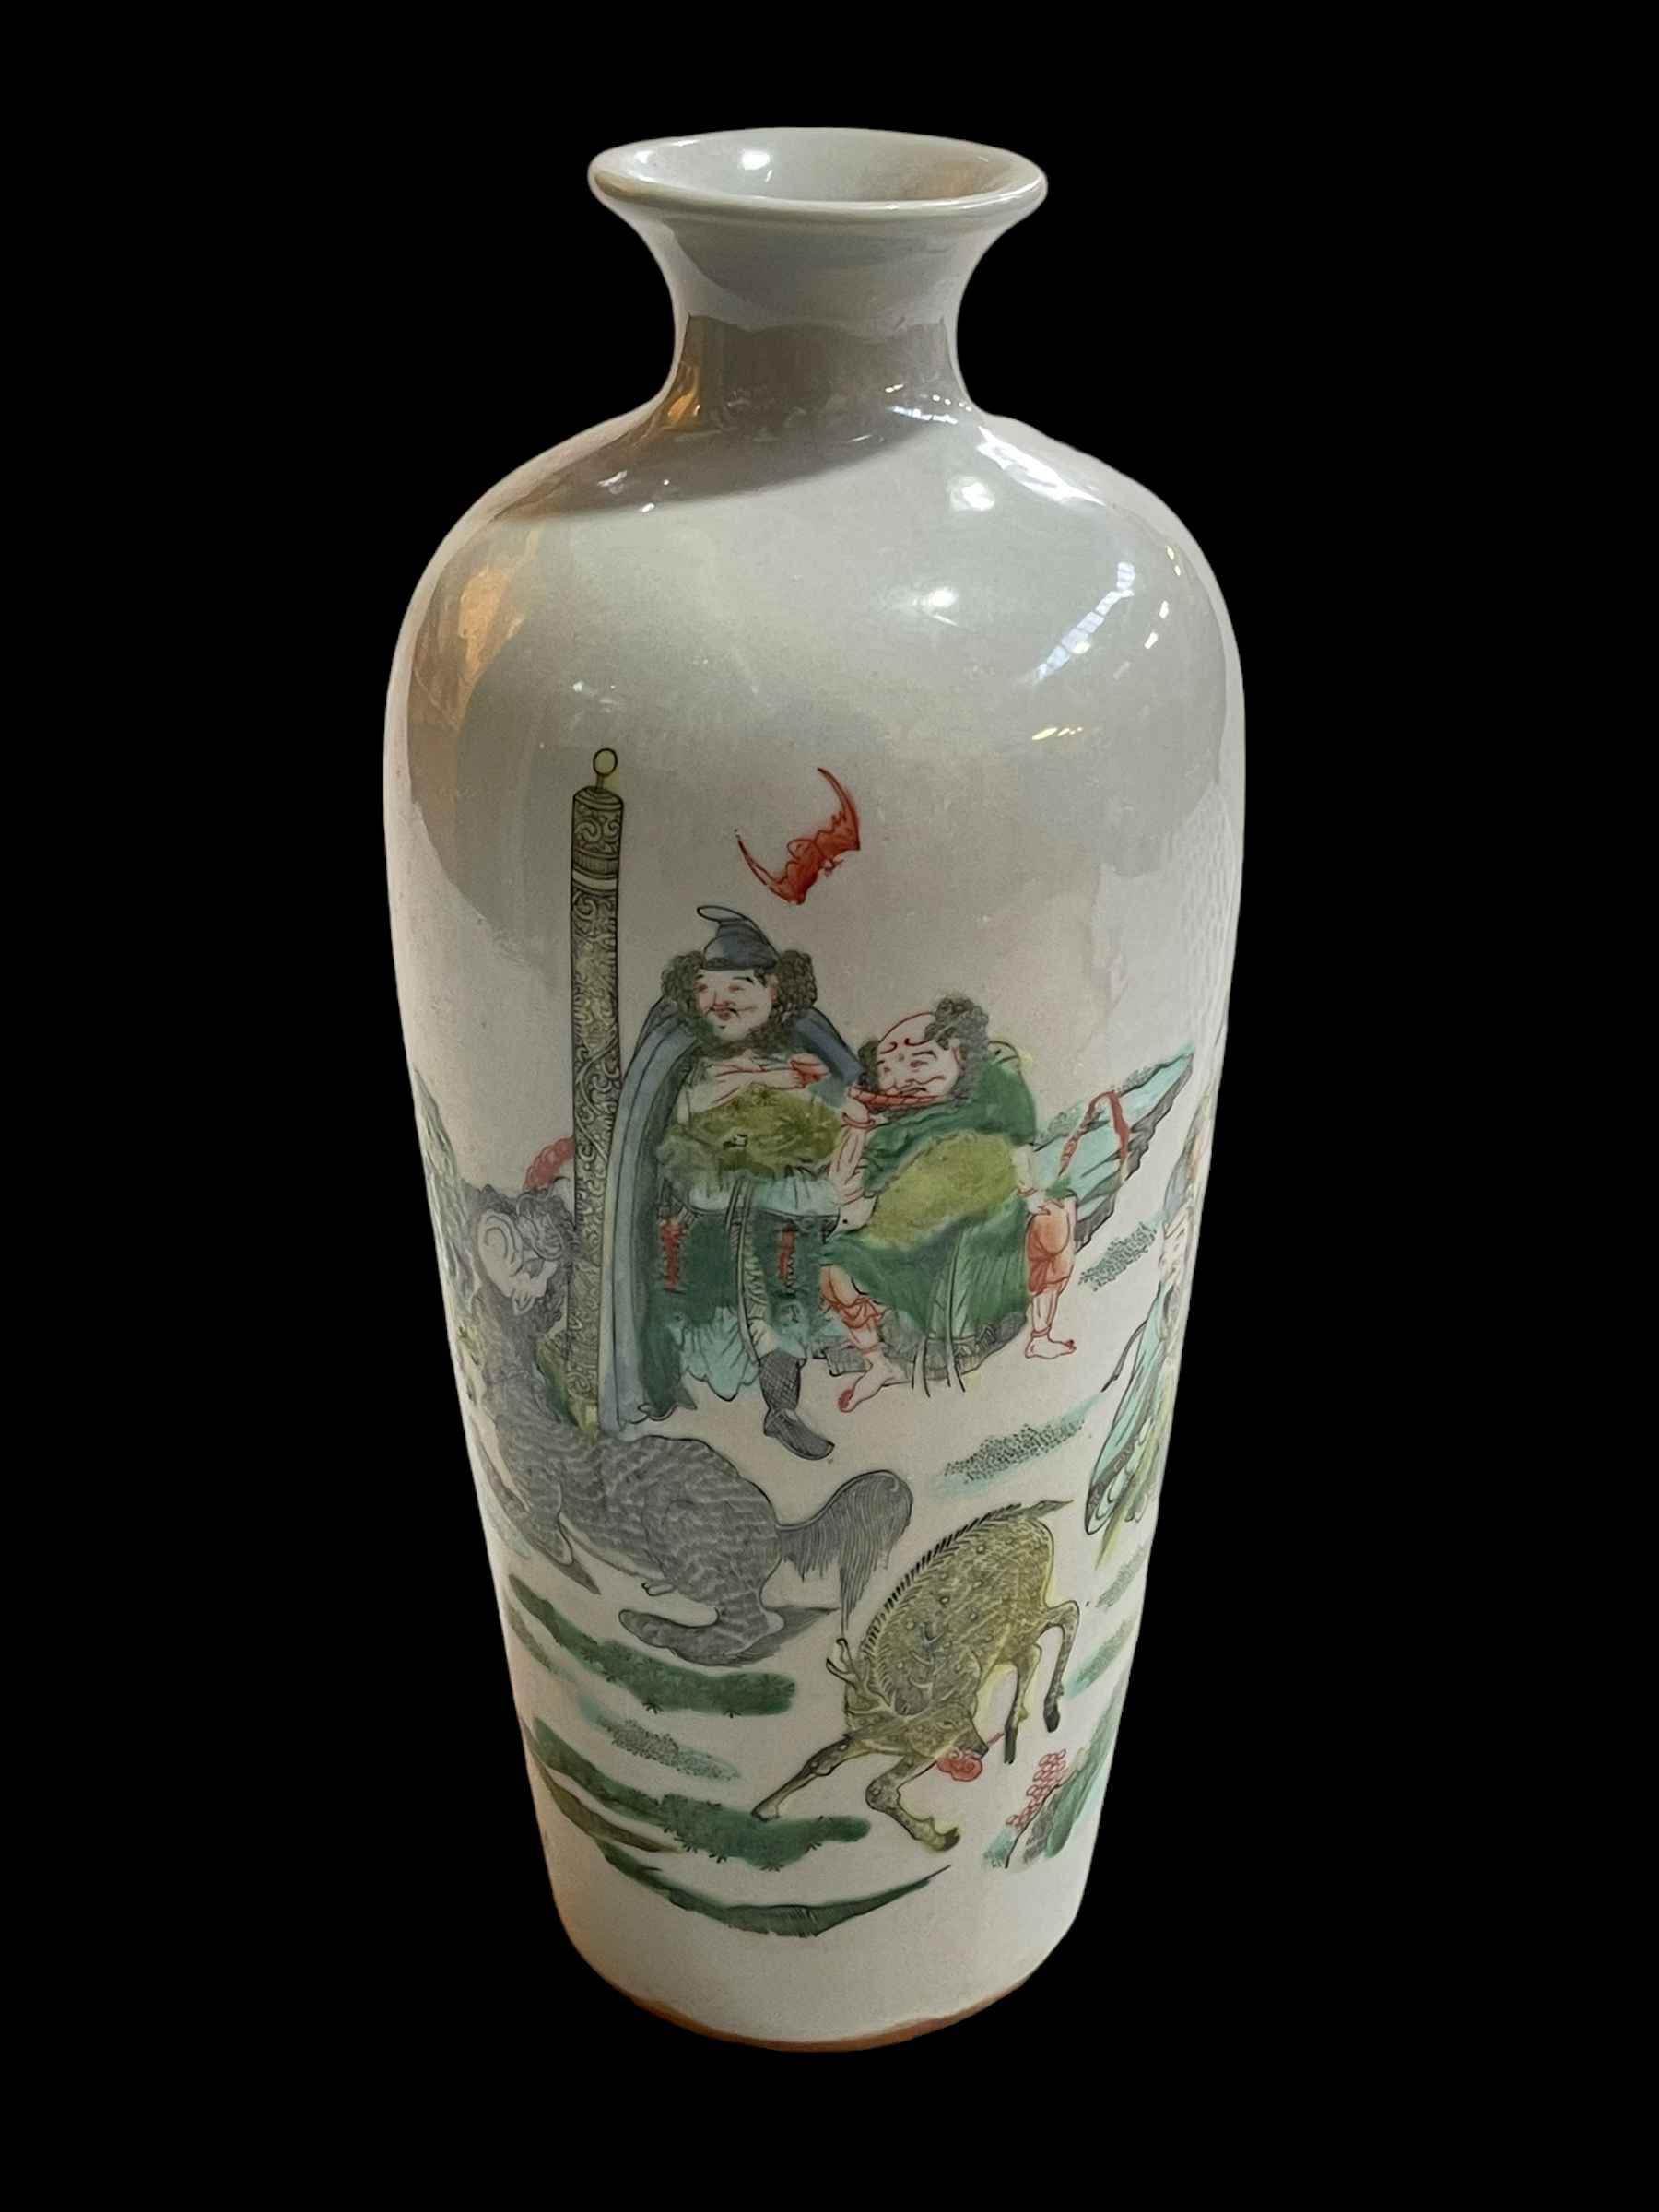 Chinese famille verte vase with decoration of figures, foo dog, deer and bat, 25cm.